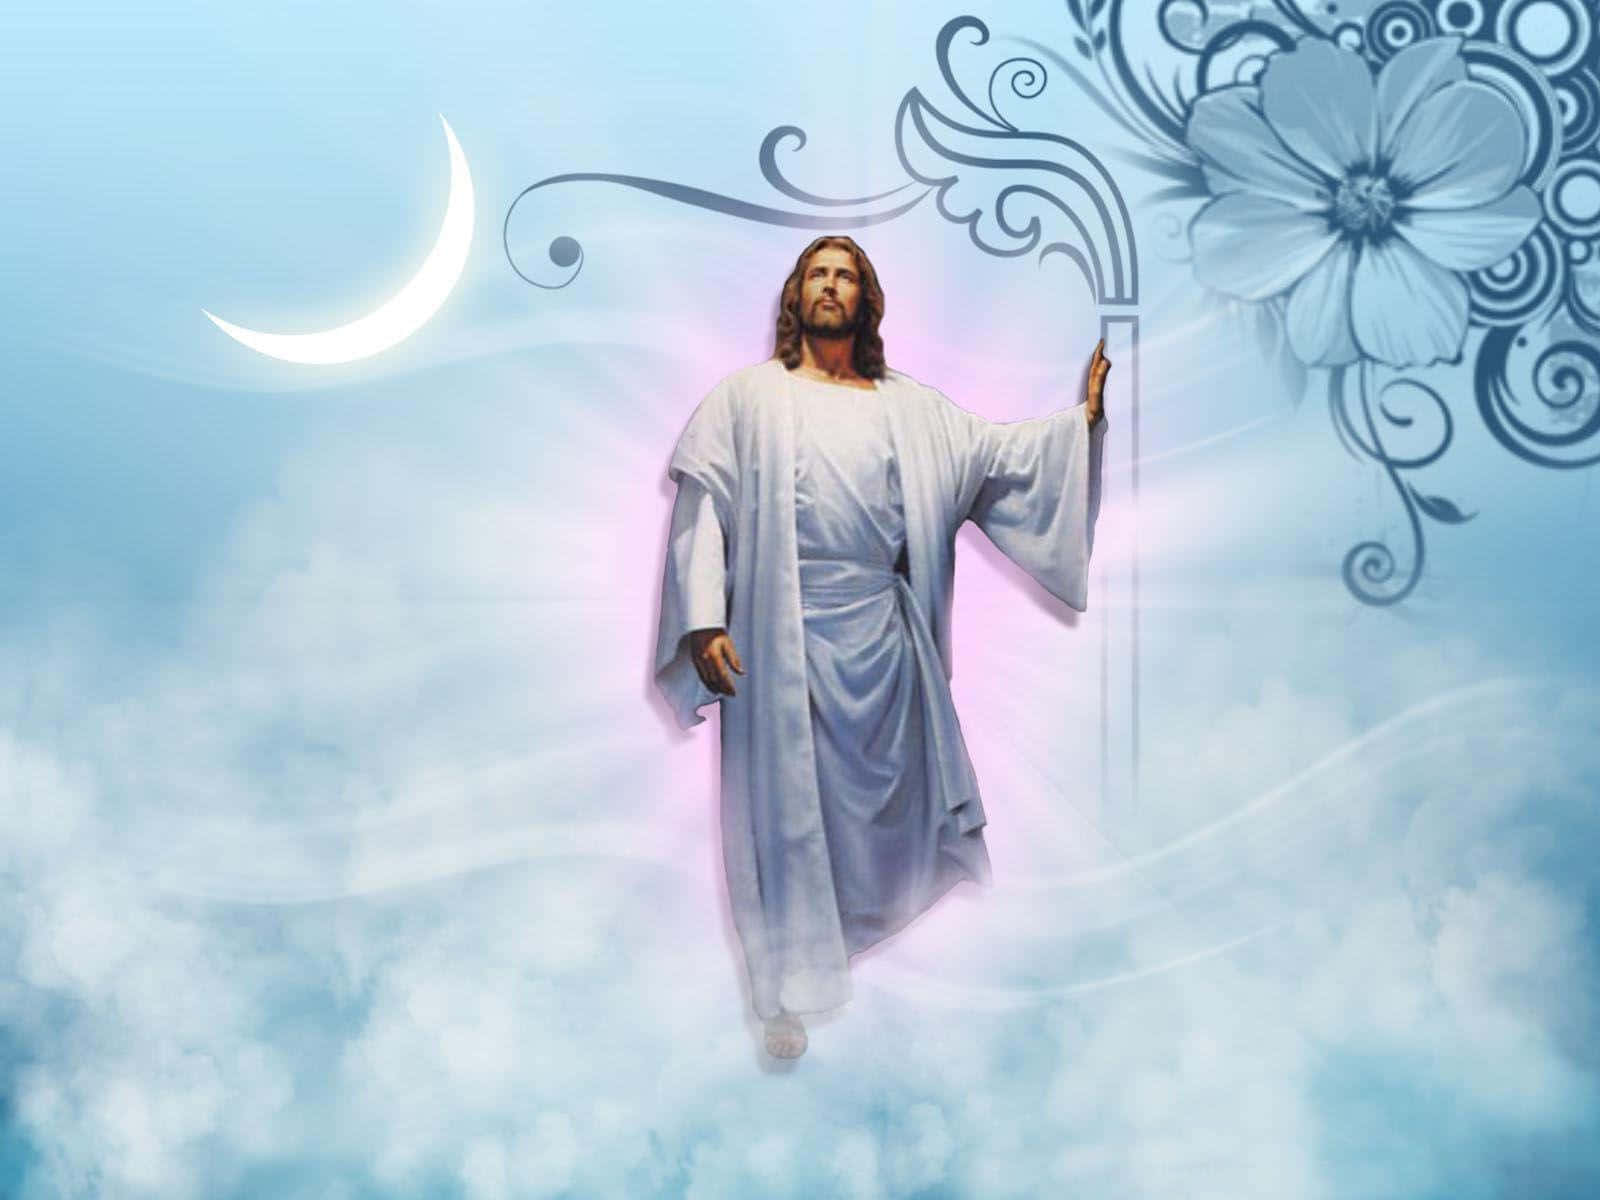 Free Jesus Wallpaper Downloads, [200+] Jesus Wallpapers for FREE |  